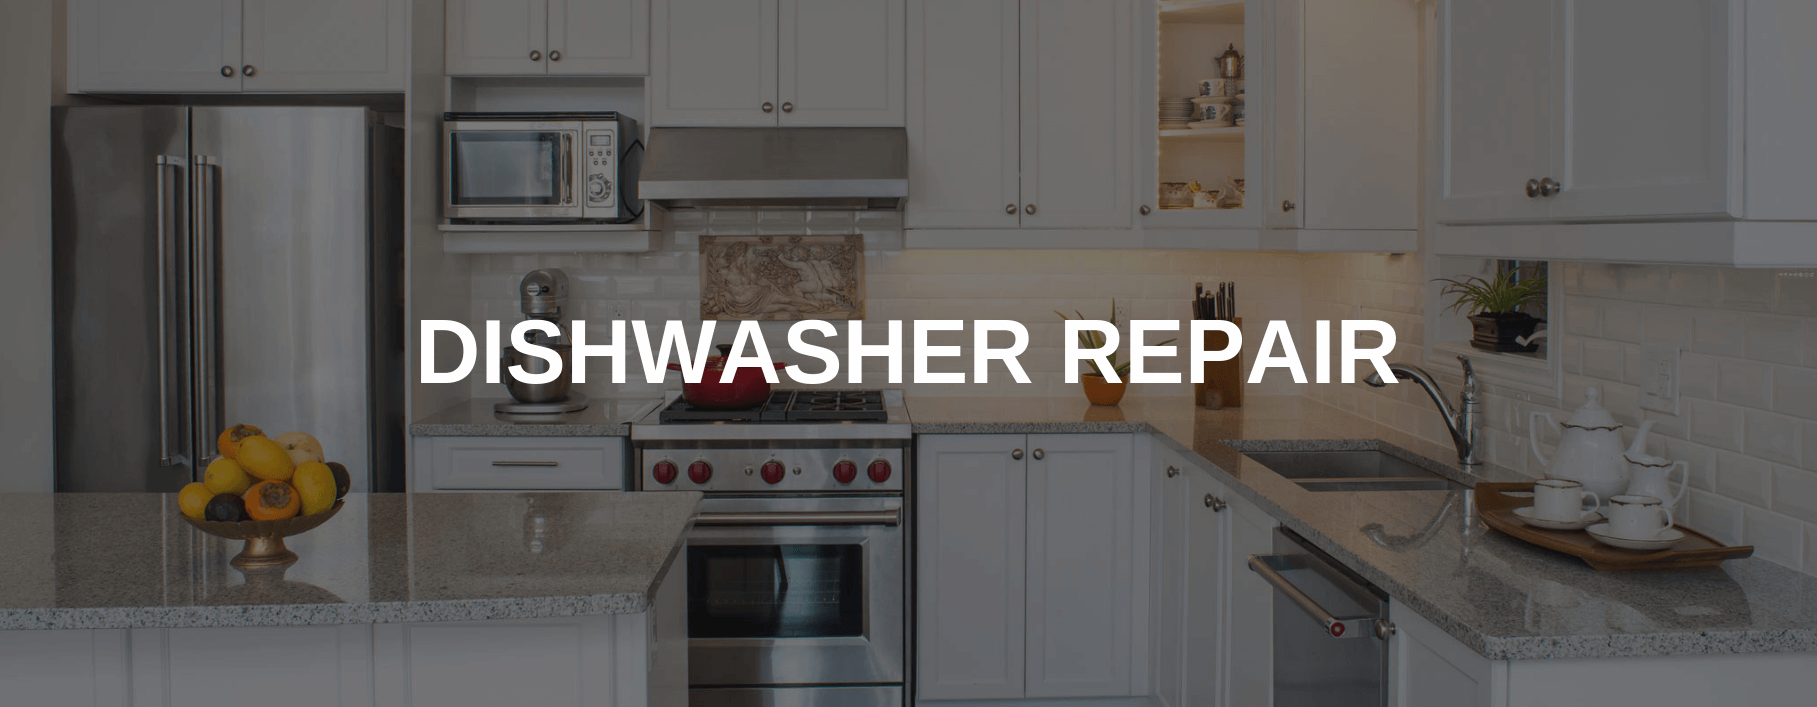 dishwasher repair bryan tx